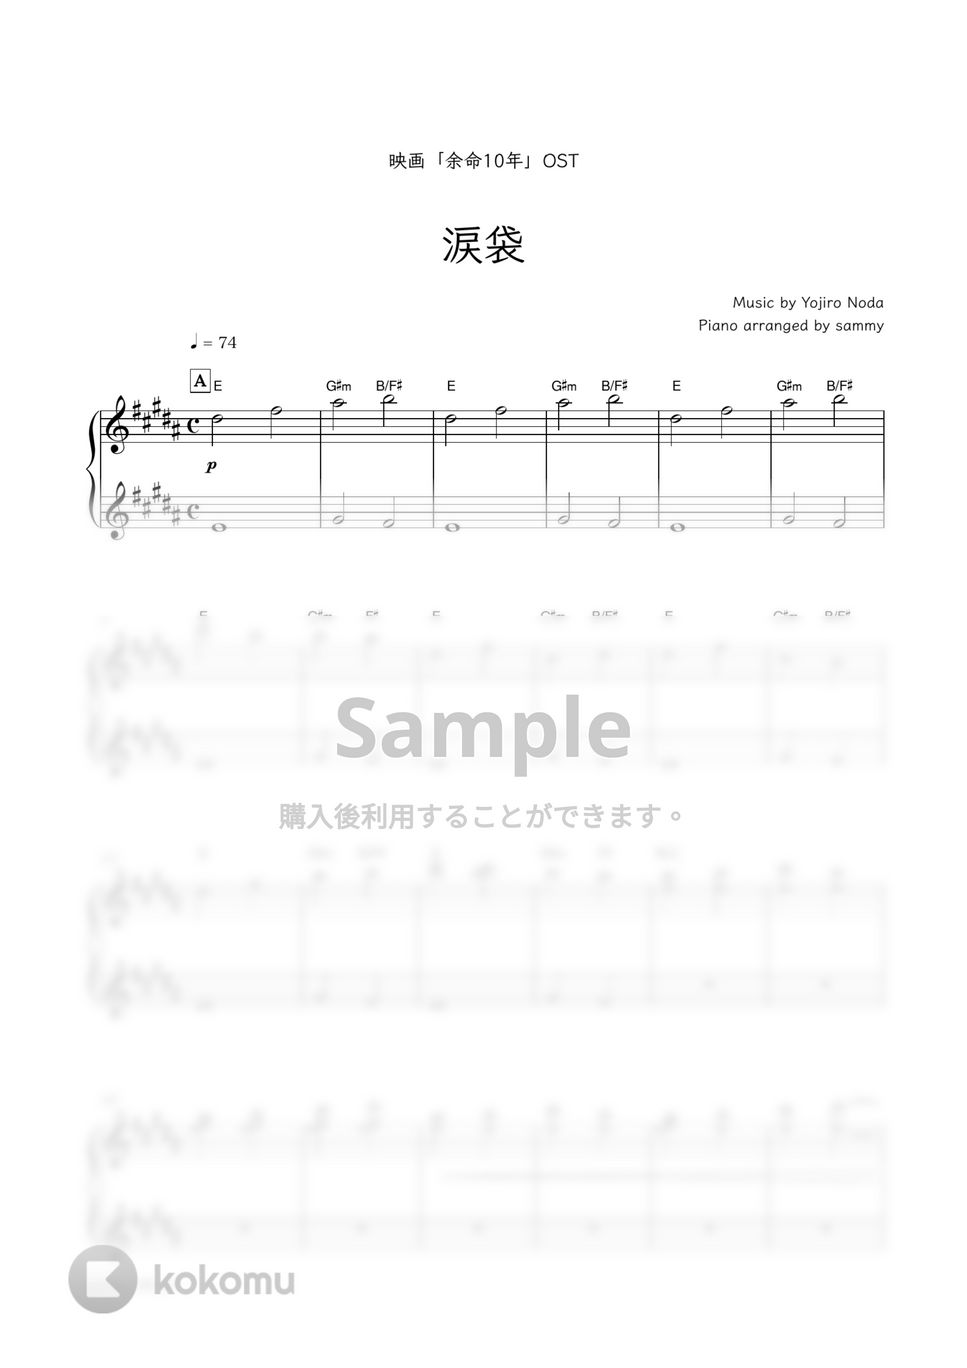 映画「余命10年」OST／RADWIMPS - 涙袋 by sammy